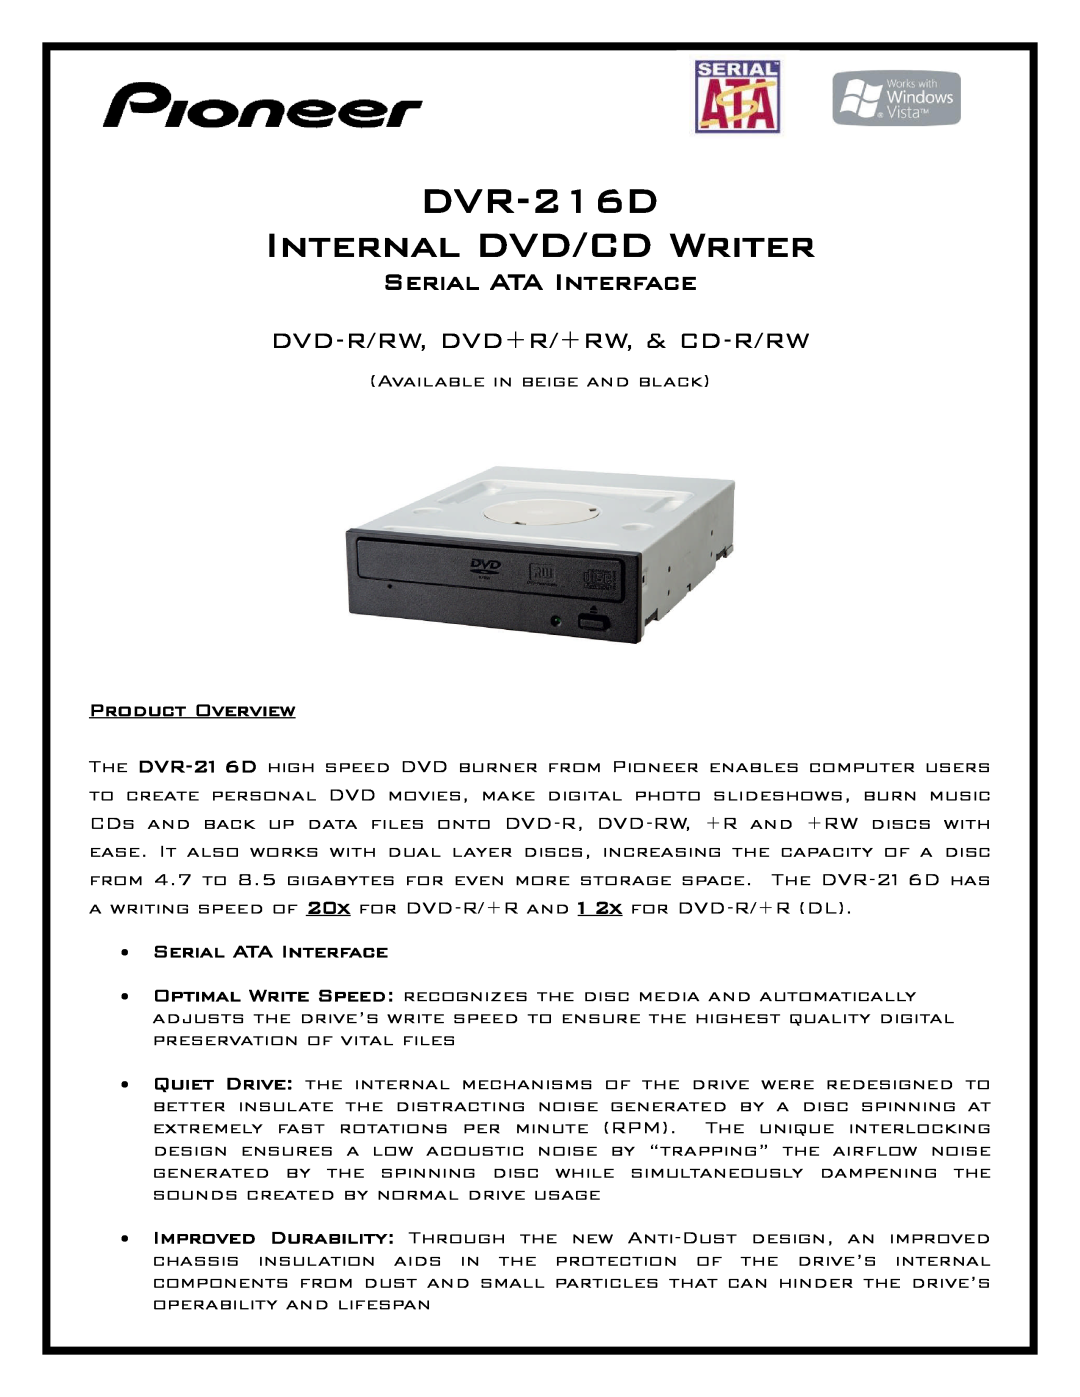 Pioneer manual DVR-216D Internal DVD/CD Writer, Serial ATA Interface, Dvd-R/Rw, Dvd+R/+Rw, & Cd-R/Rw, Product Overview 